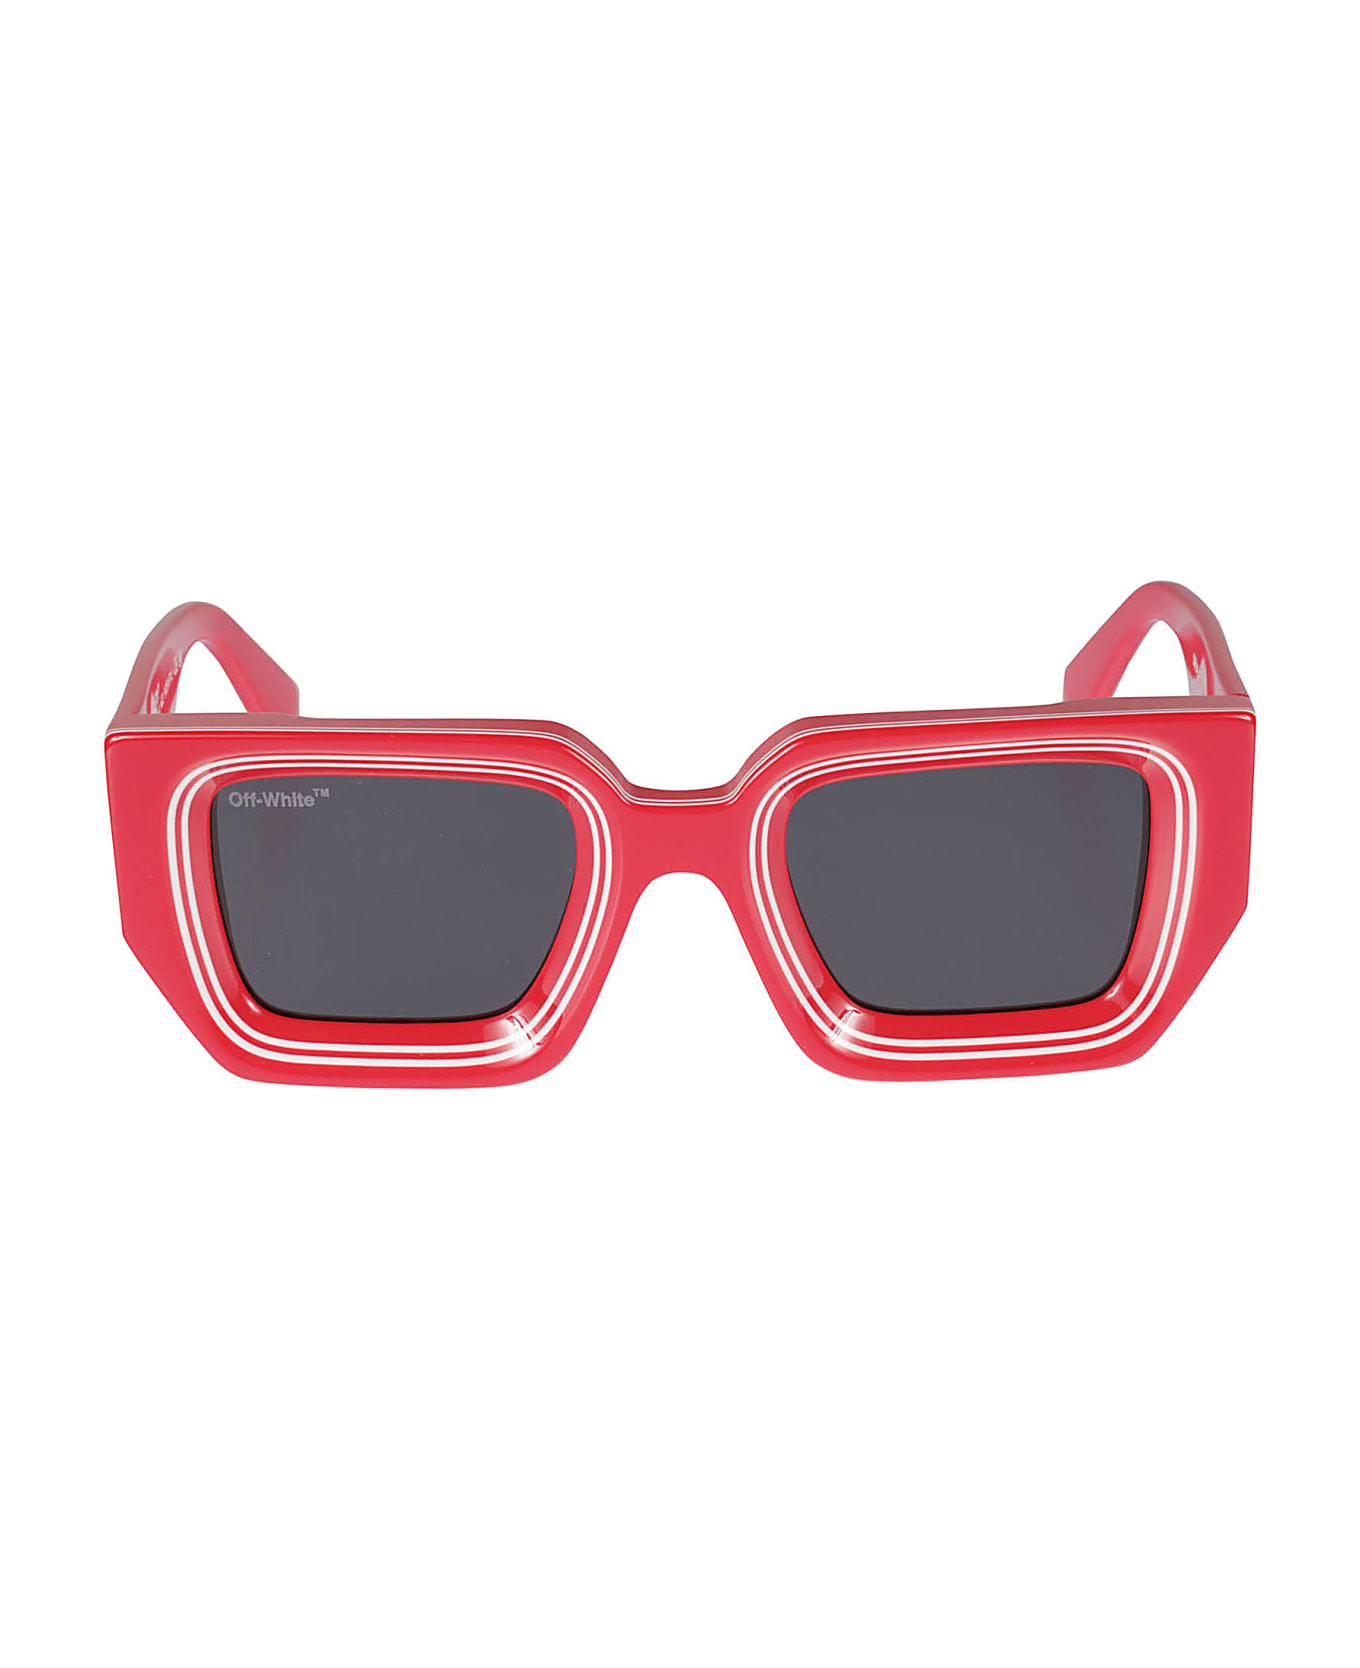 Off-White Francisco Sunglasses - Red